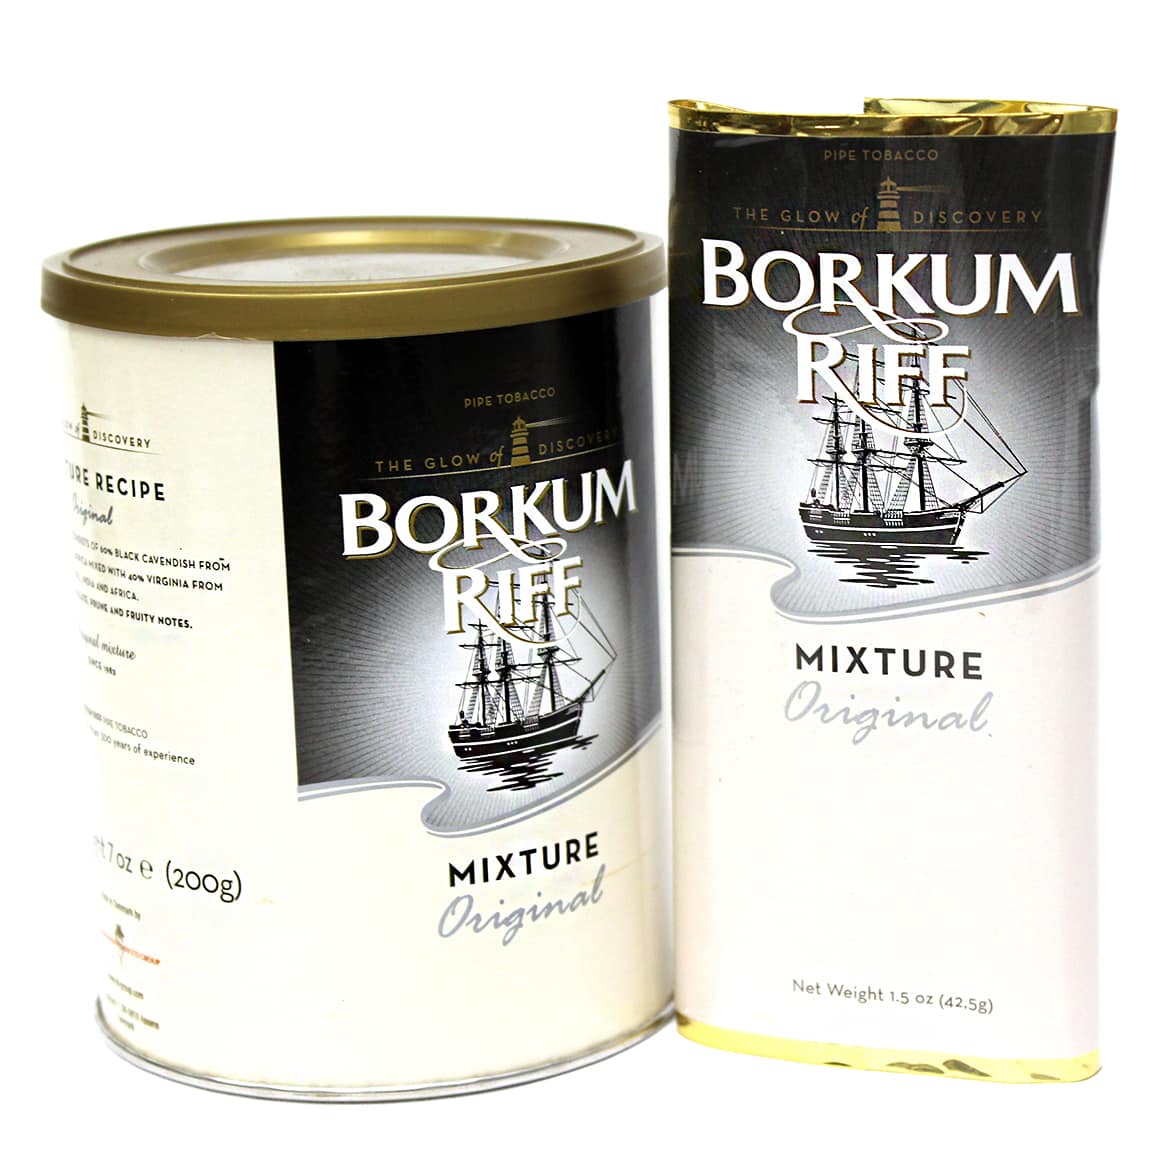 Bourkum Riff Original Pipe Tobacco